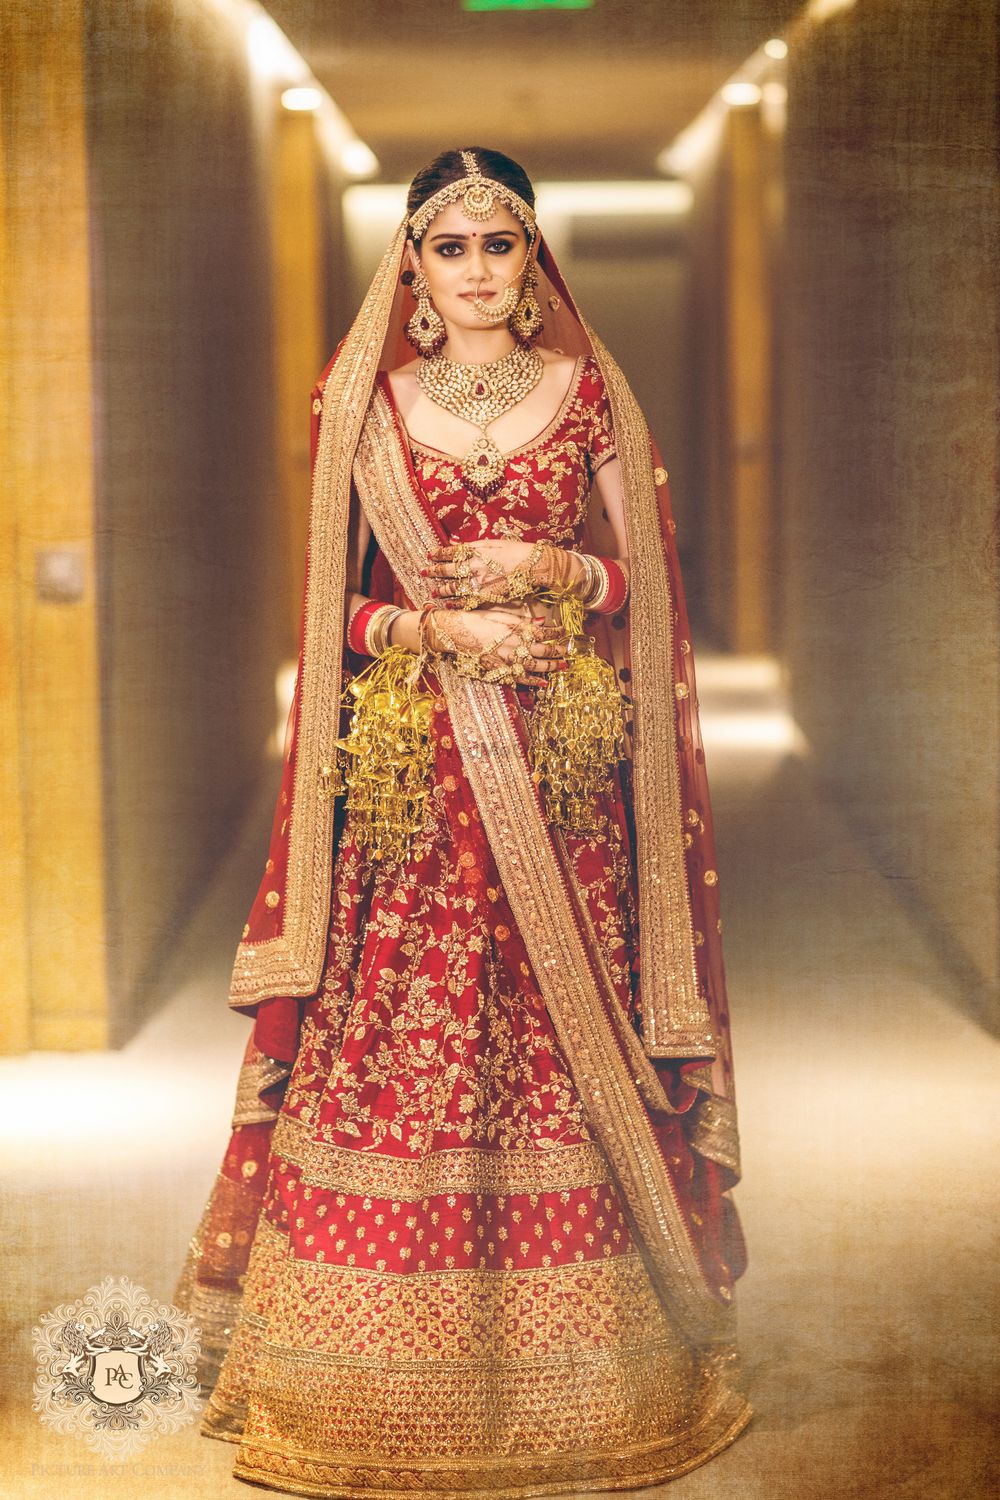 Photo of Red and gold bridal lehenga wearing kaleere